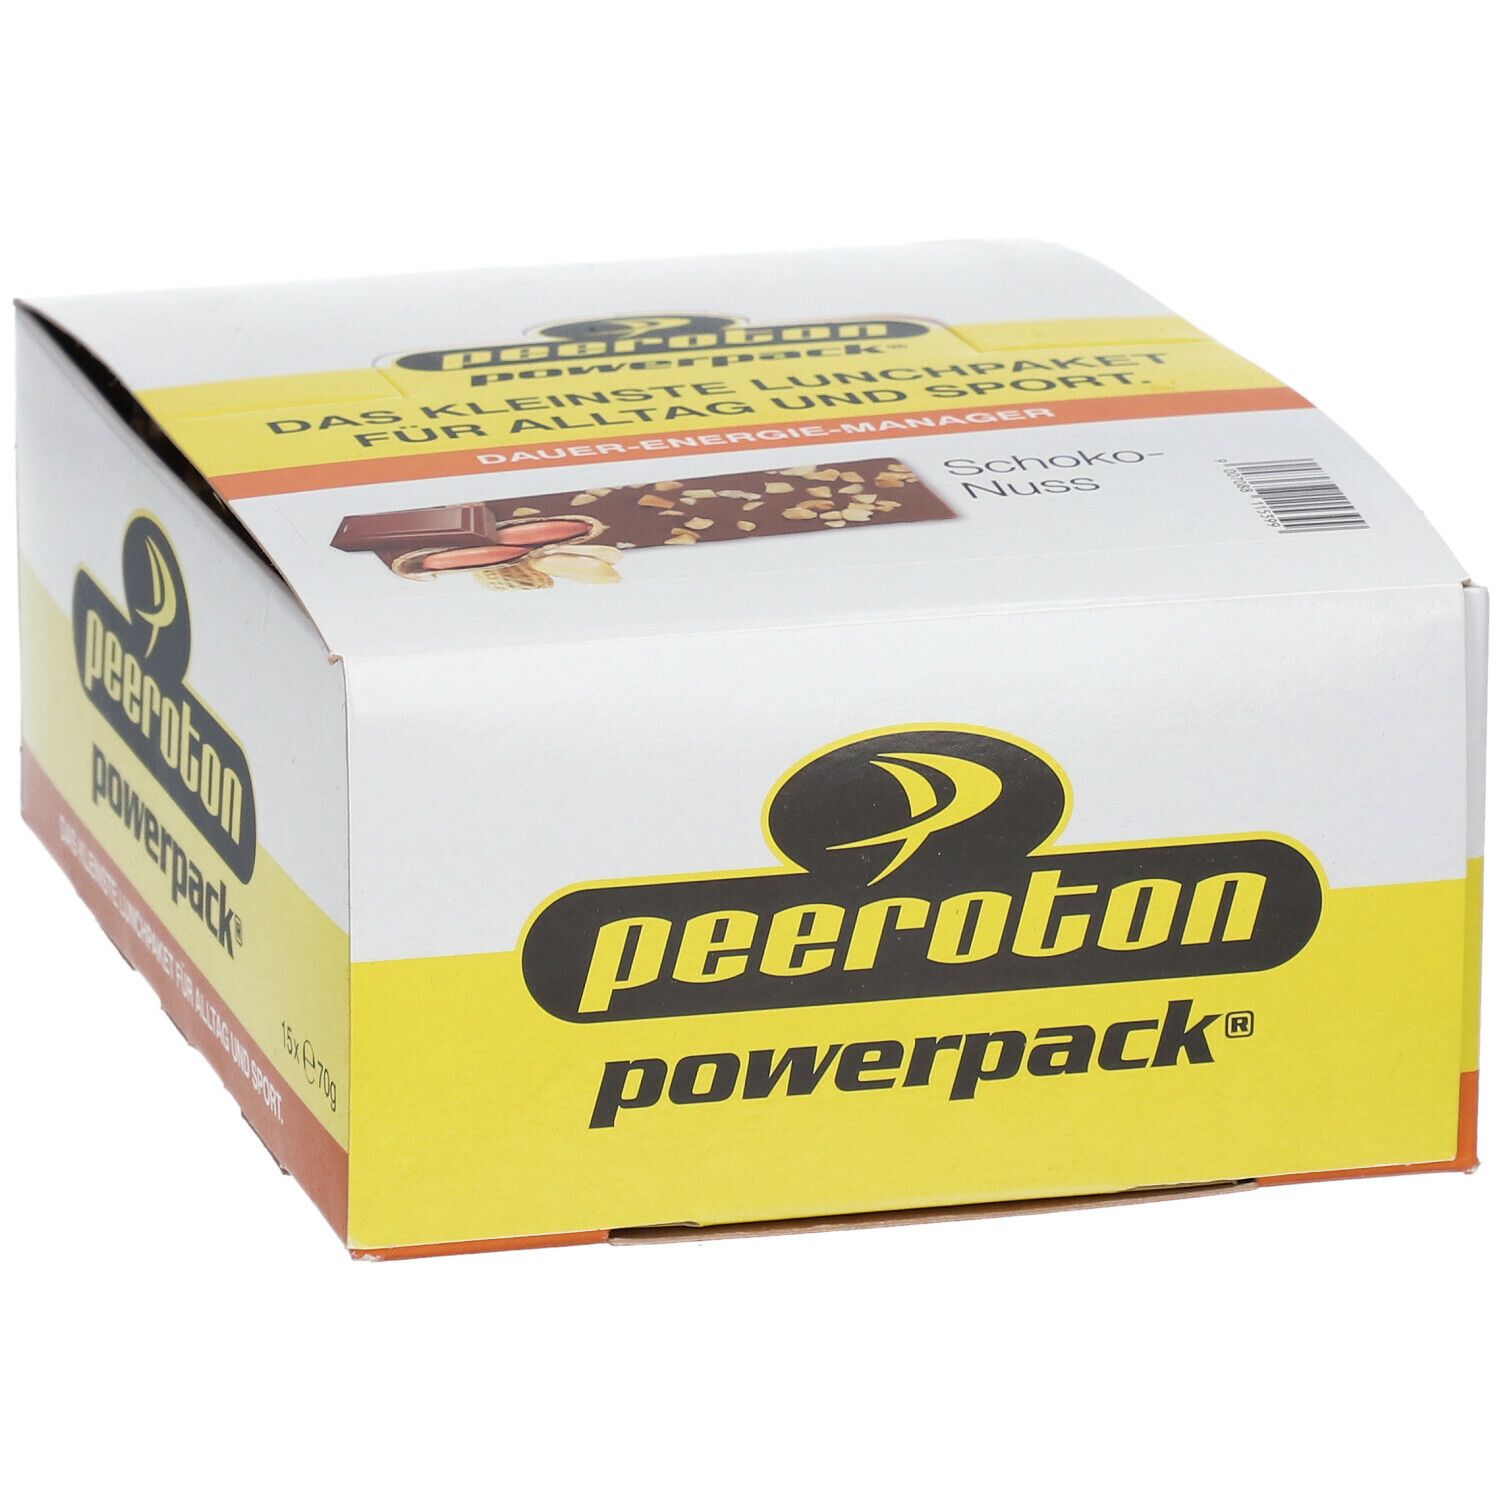 peeroton® Powerpack Riegel Schoko Nuss